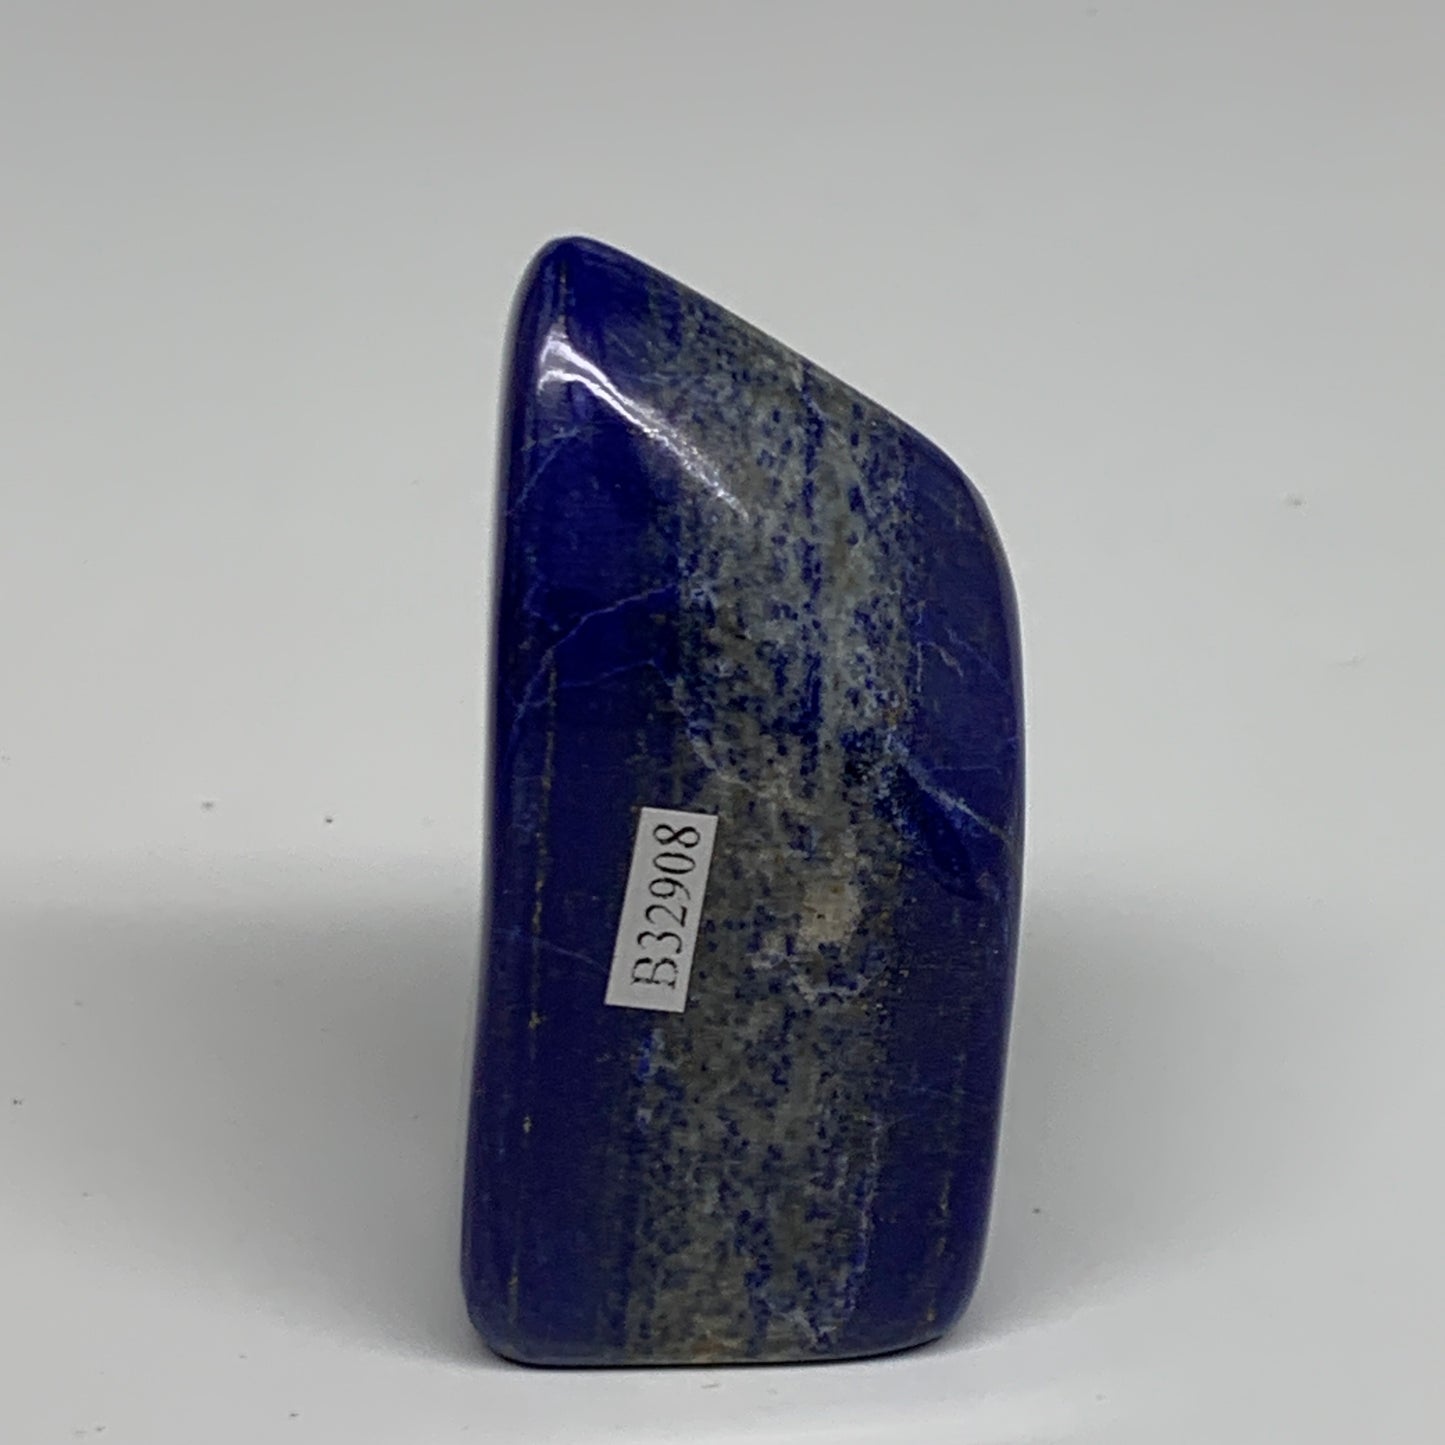 158.6g, 3"x1.4"x1" Natural Freeform Lapis Lazuli from Afghanistan, B32908